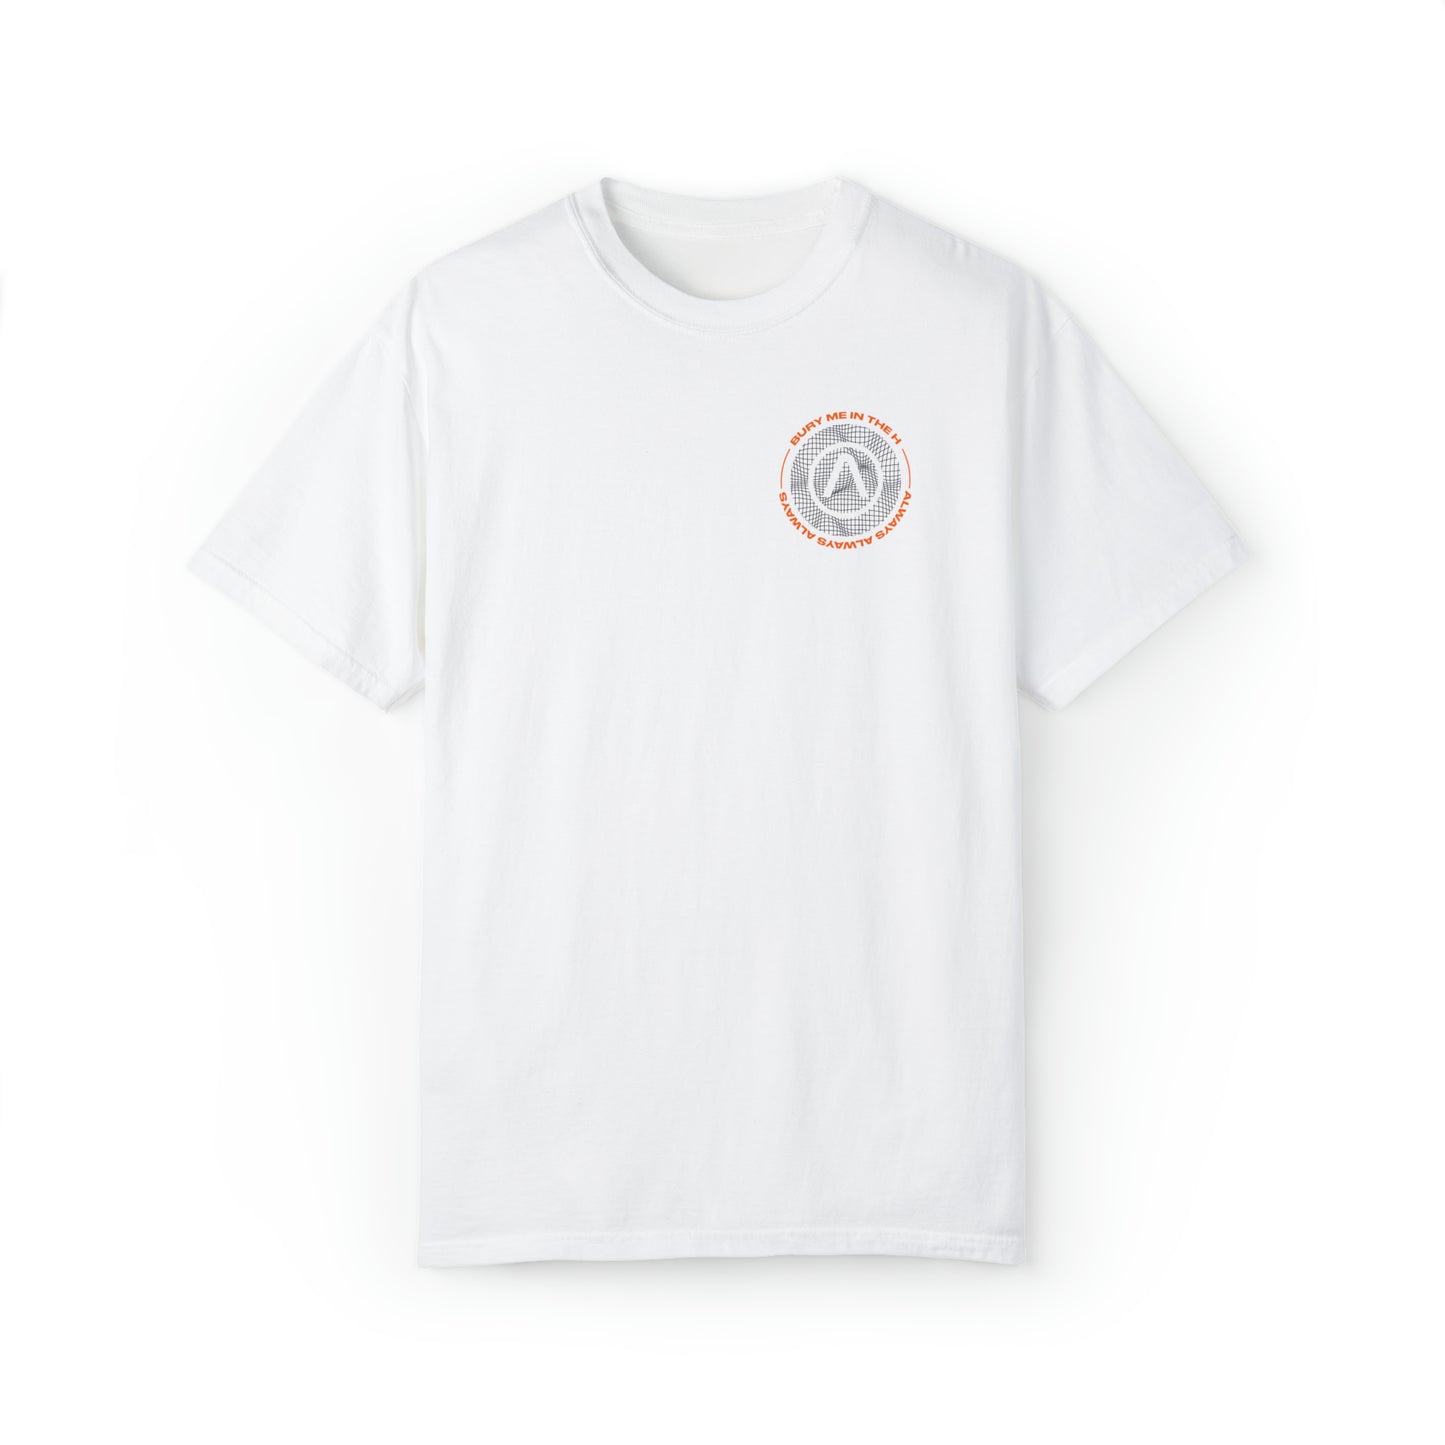 Bury Me In The H (Nova) Unisex Comfort Colors T-shirt